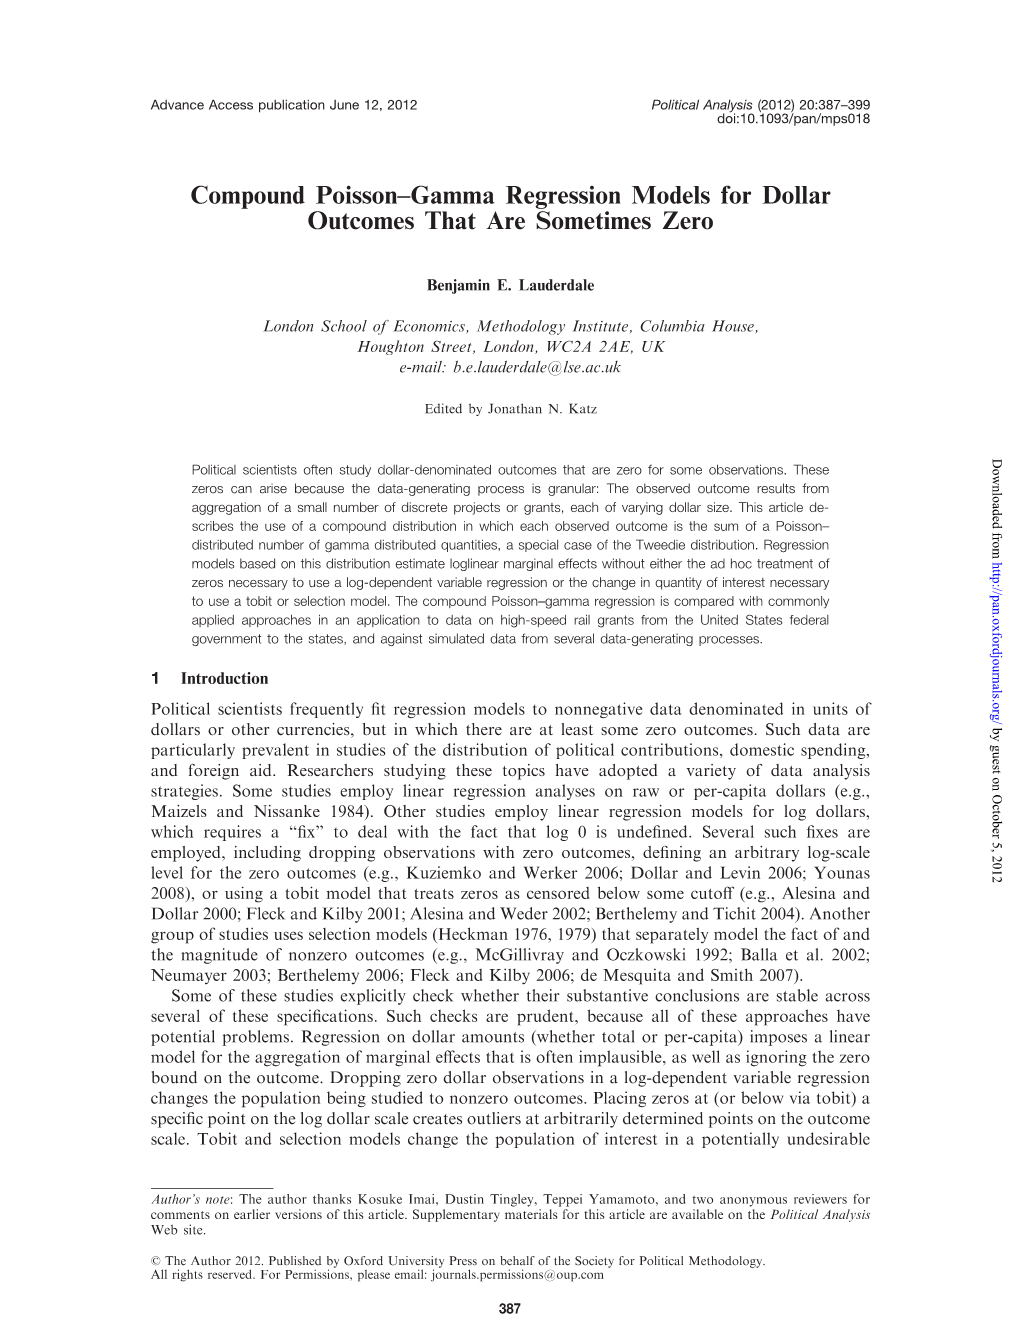 Compound Poisson–Gamma Regression Models for Dollar Outcomes That Are Sometimes Zero